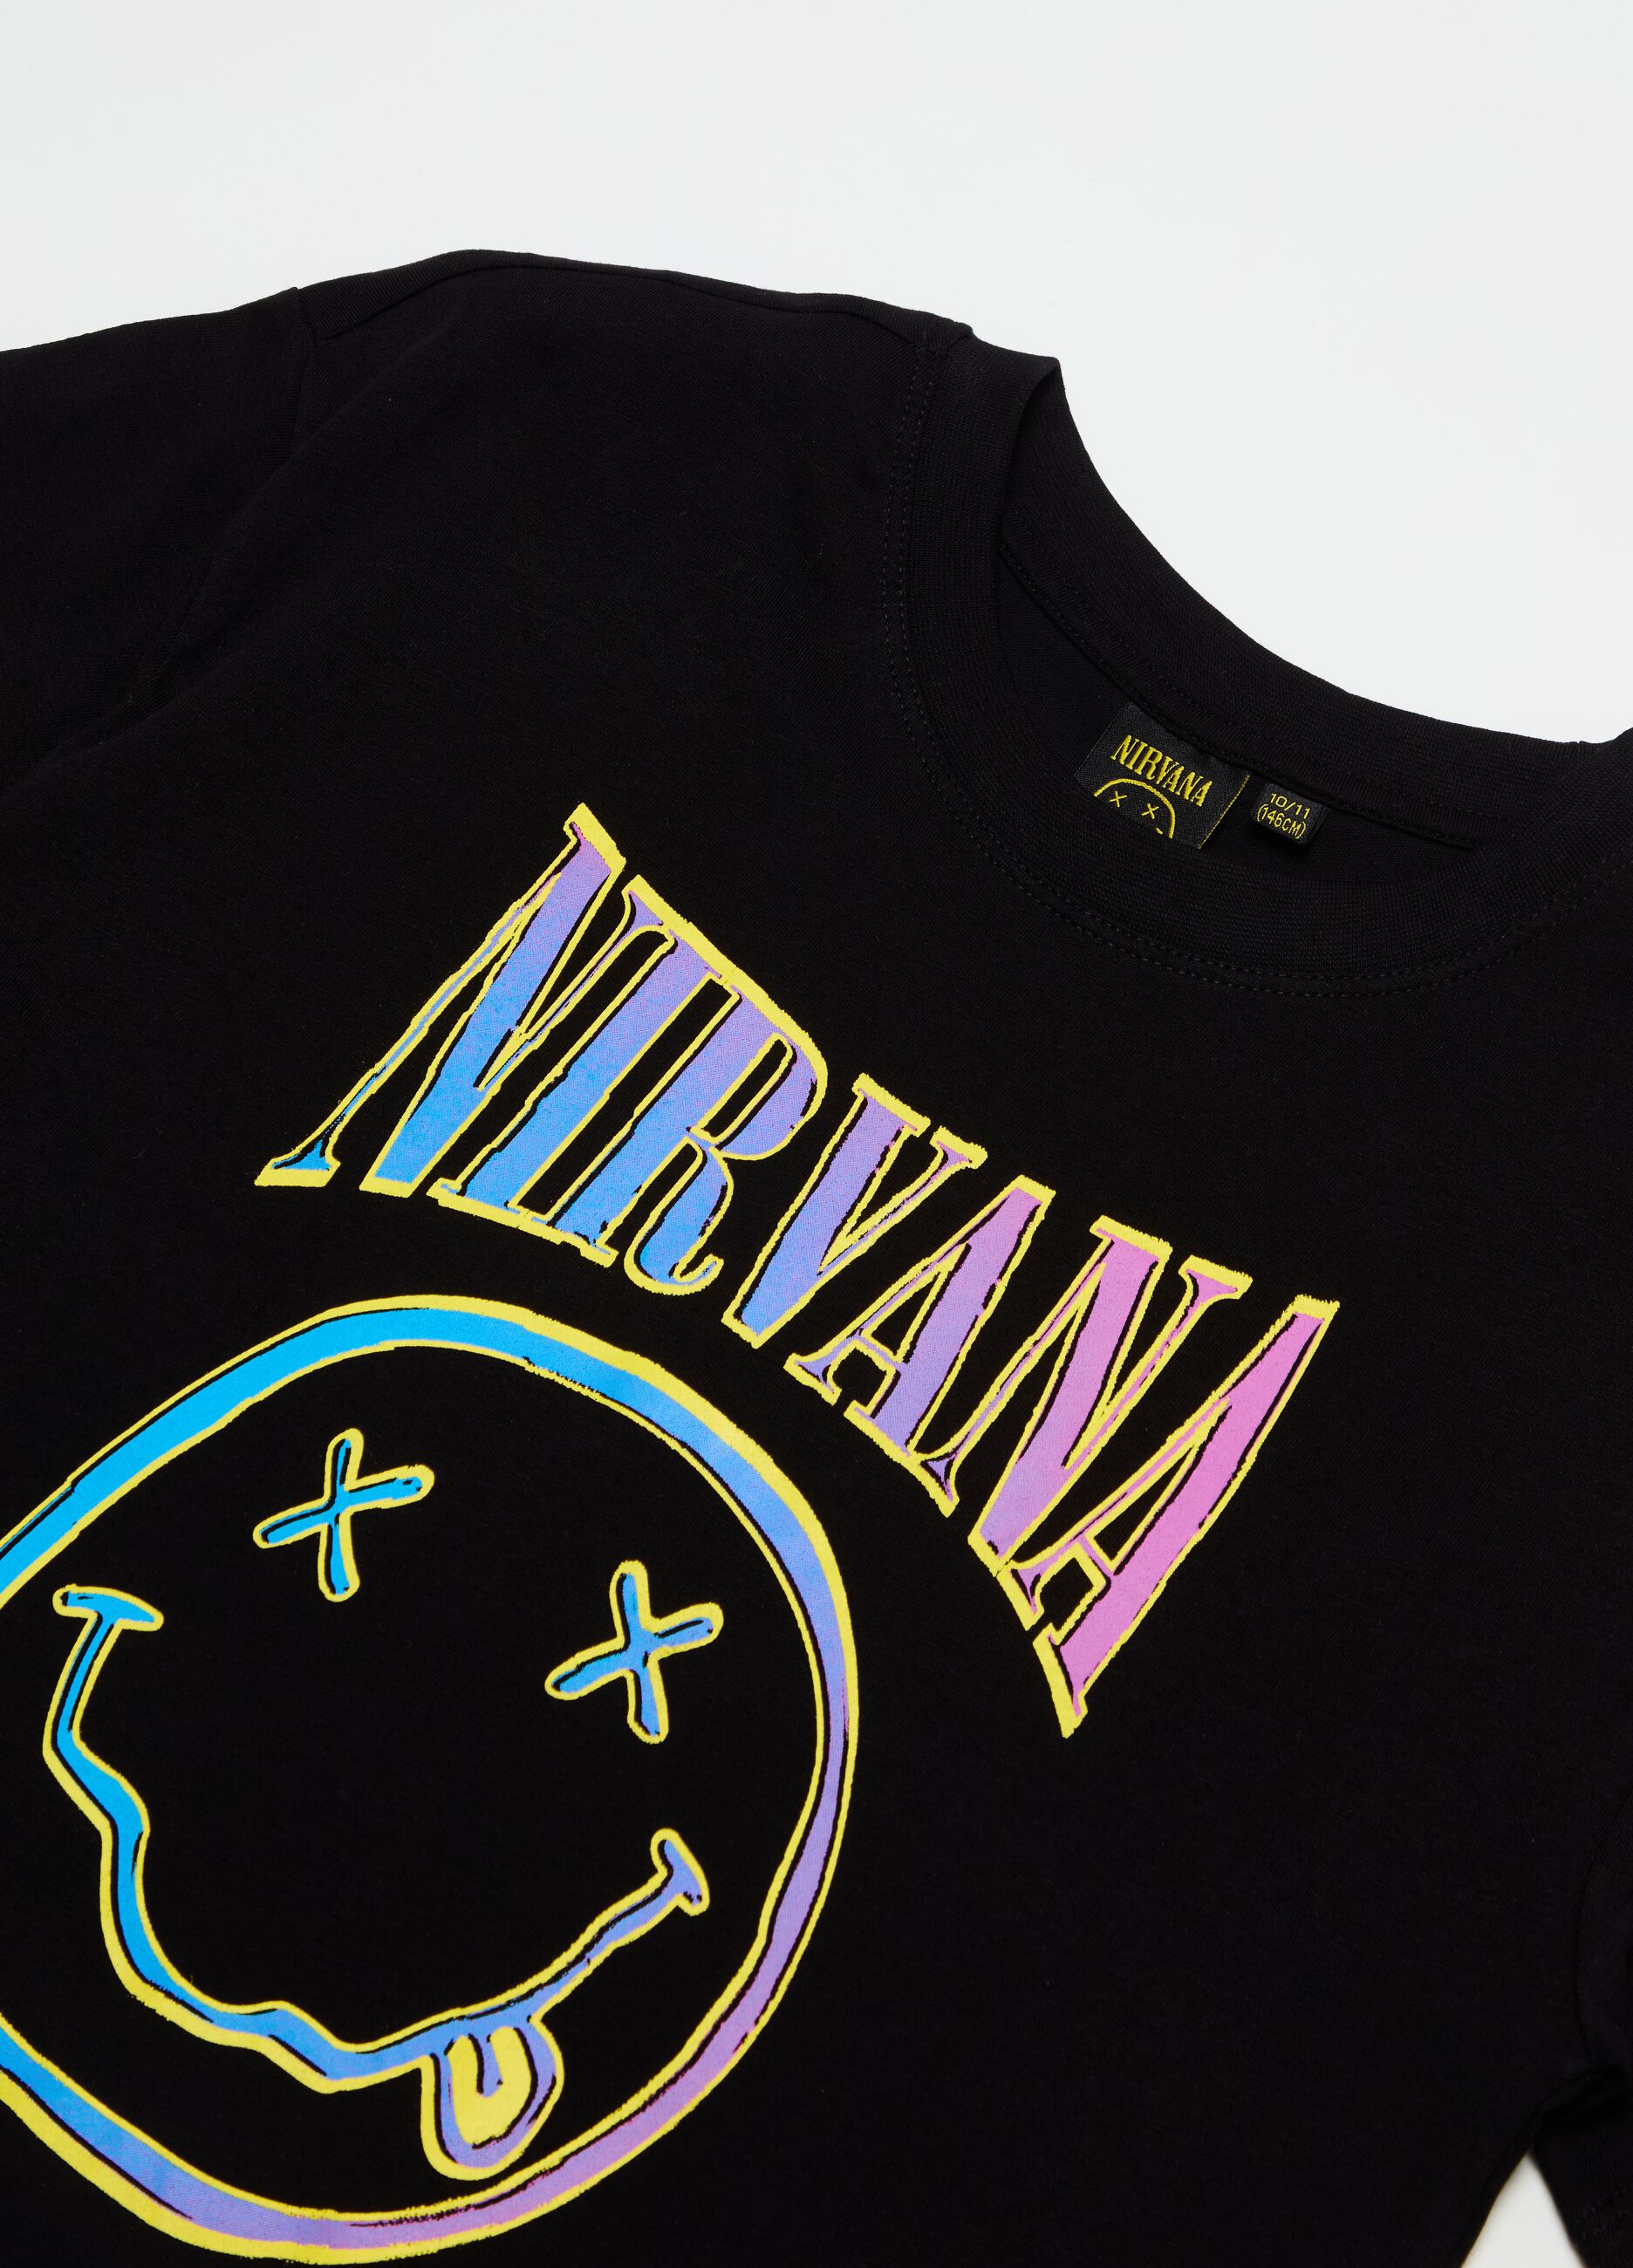 T-shirt with Nirvana logo print